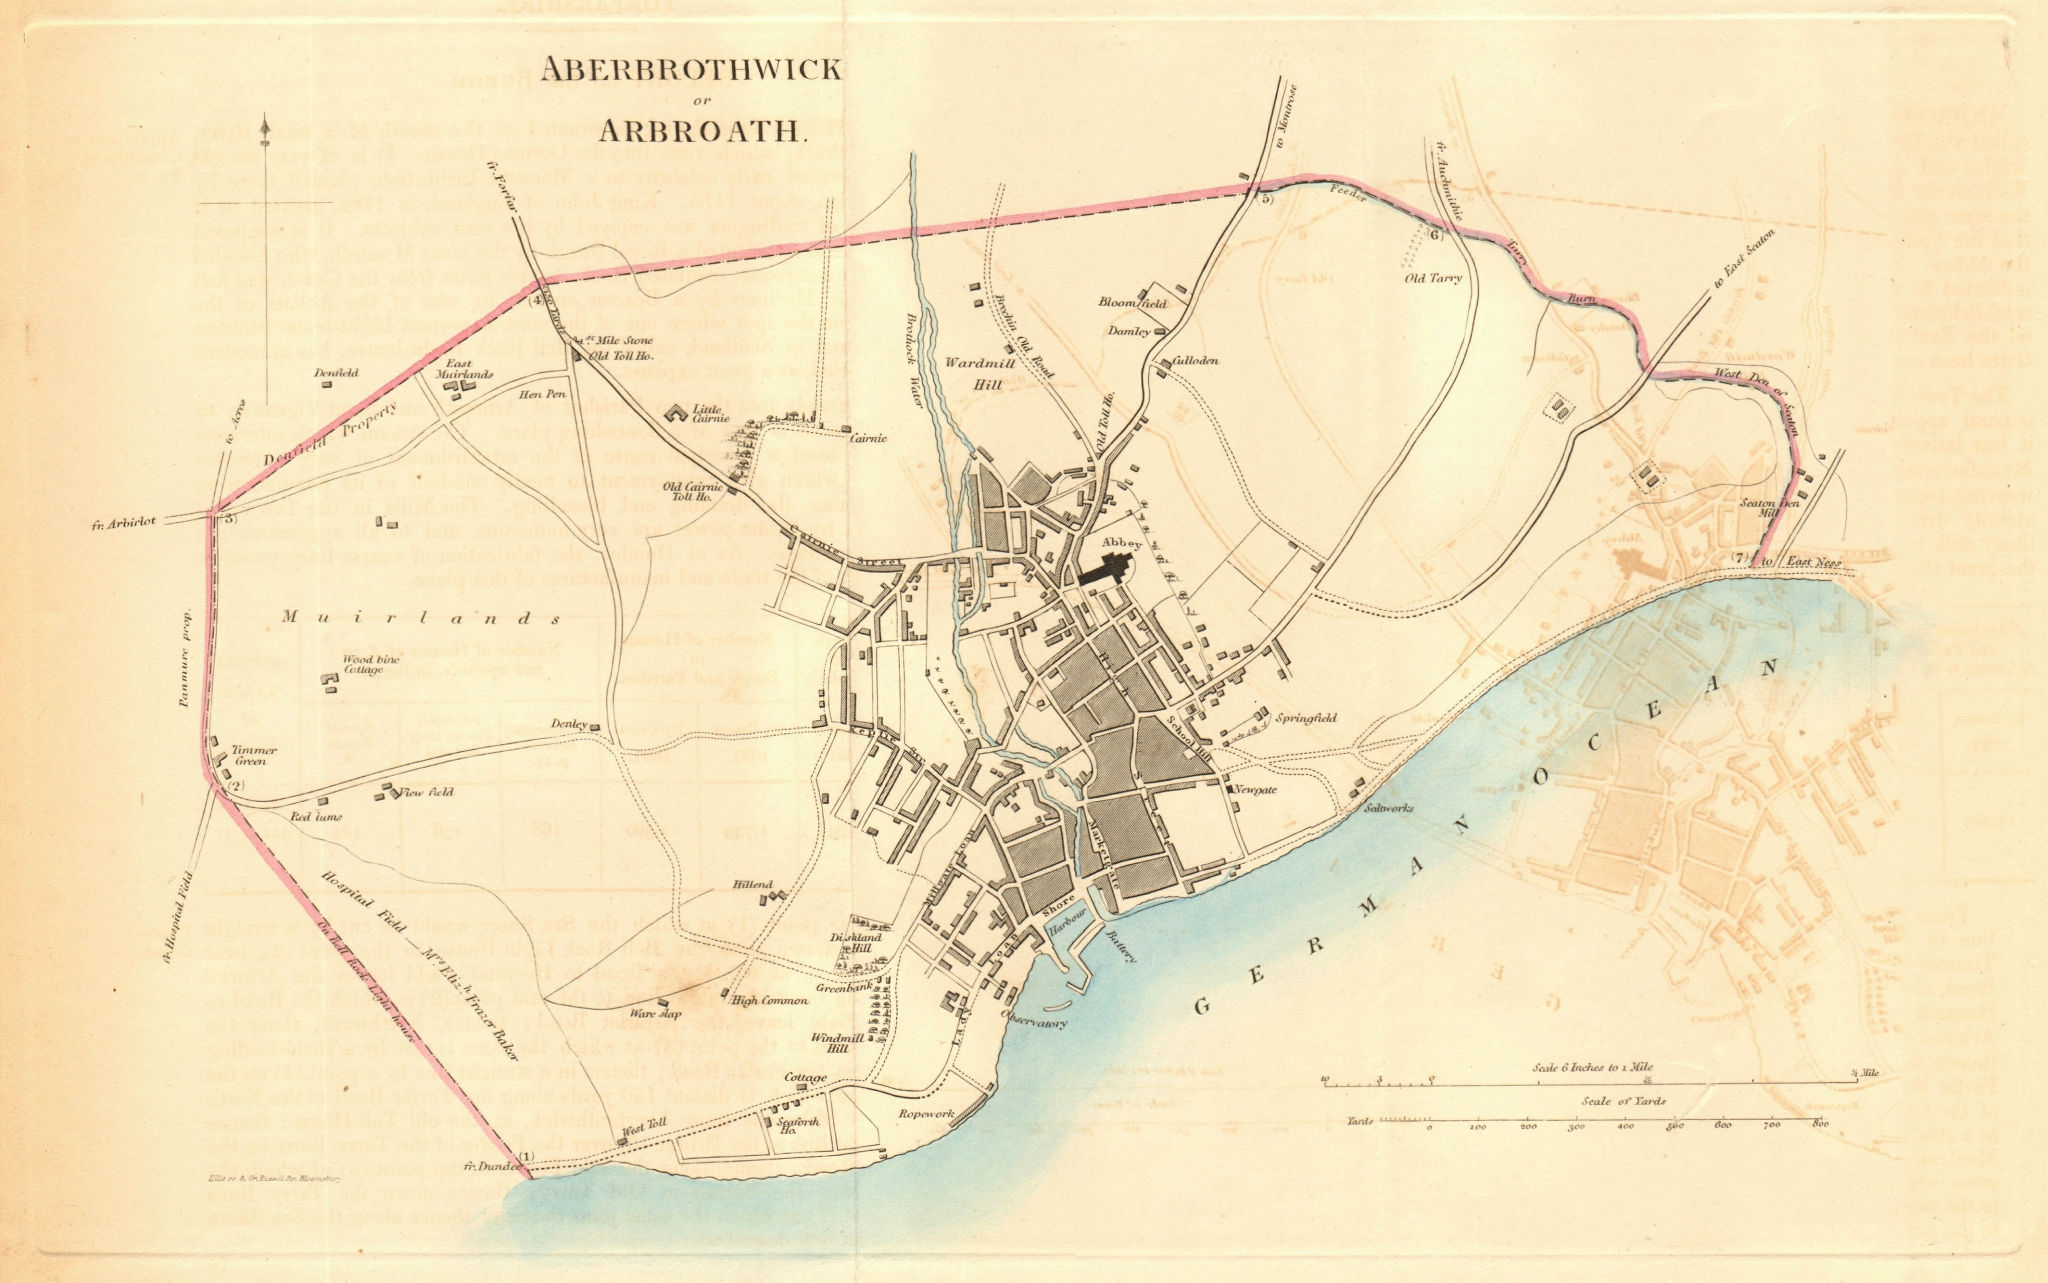 ABERBROTHWICK (ARBROATH) borough/town plan REFORM ACT. Scotland. DAWSON 1832 map